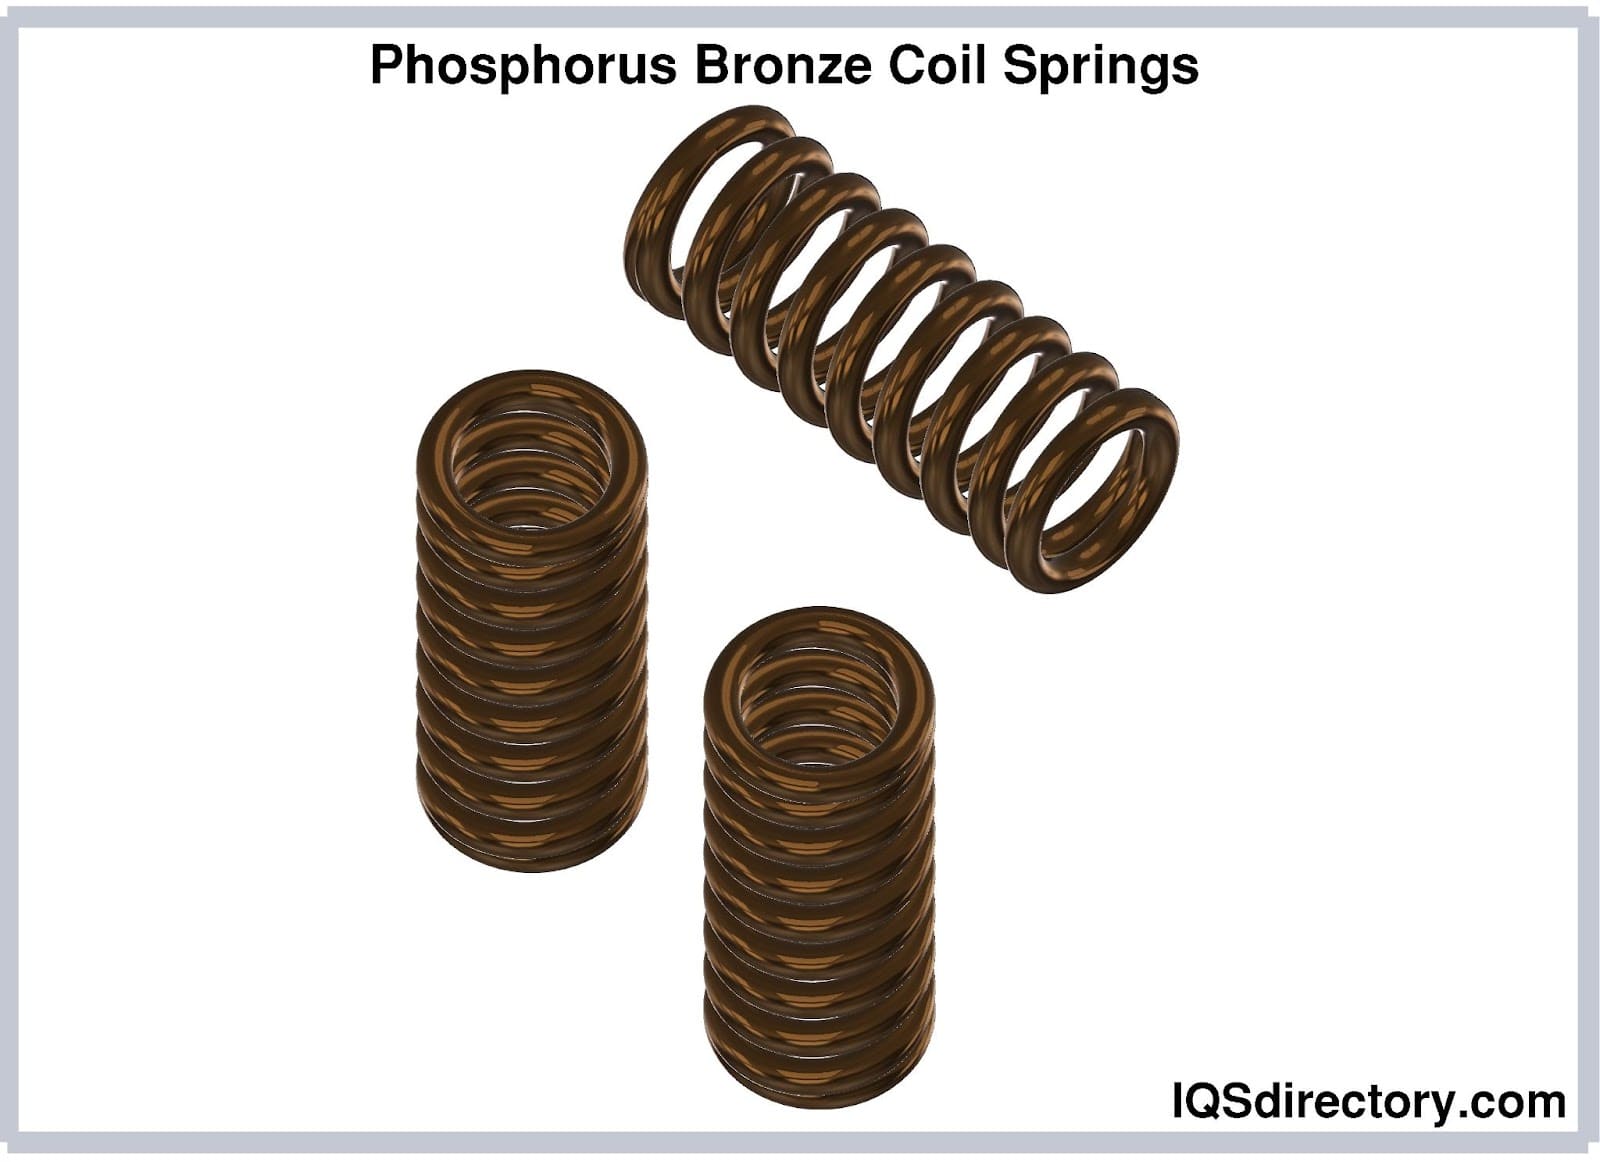 Phosphorus Bronze Coil Springs